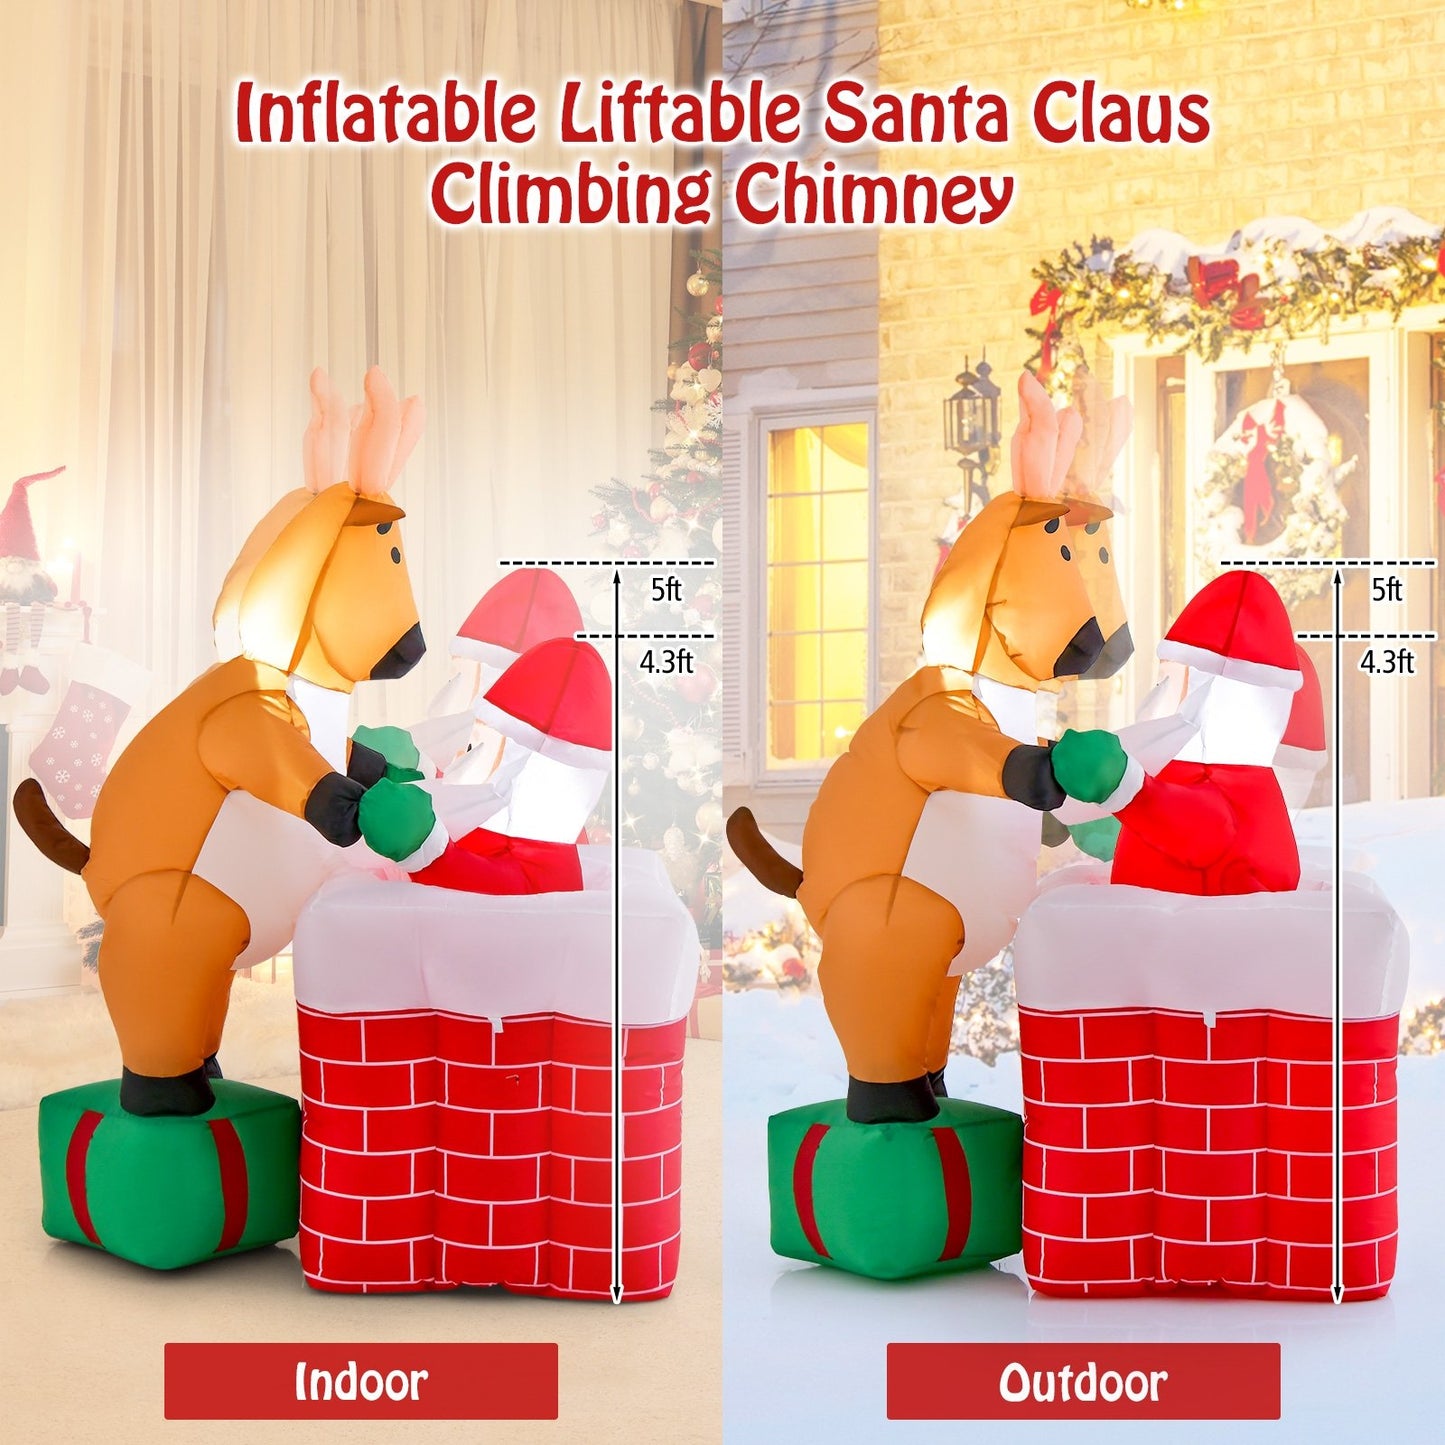 5 Feet Inflatable Liftable Santa Claus Climbing Chimney - Gallery Canada